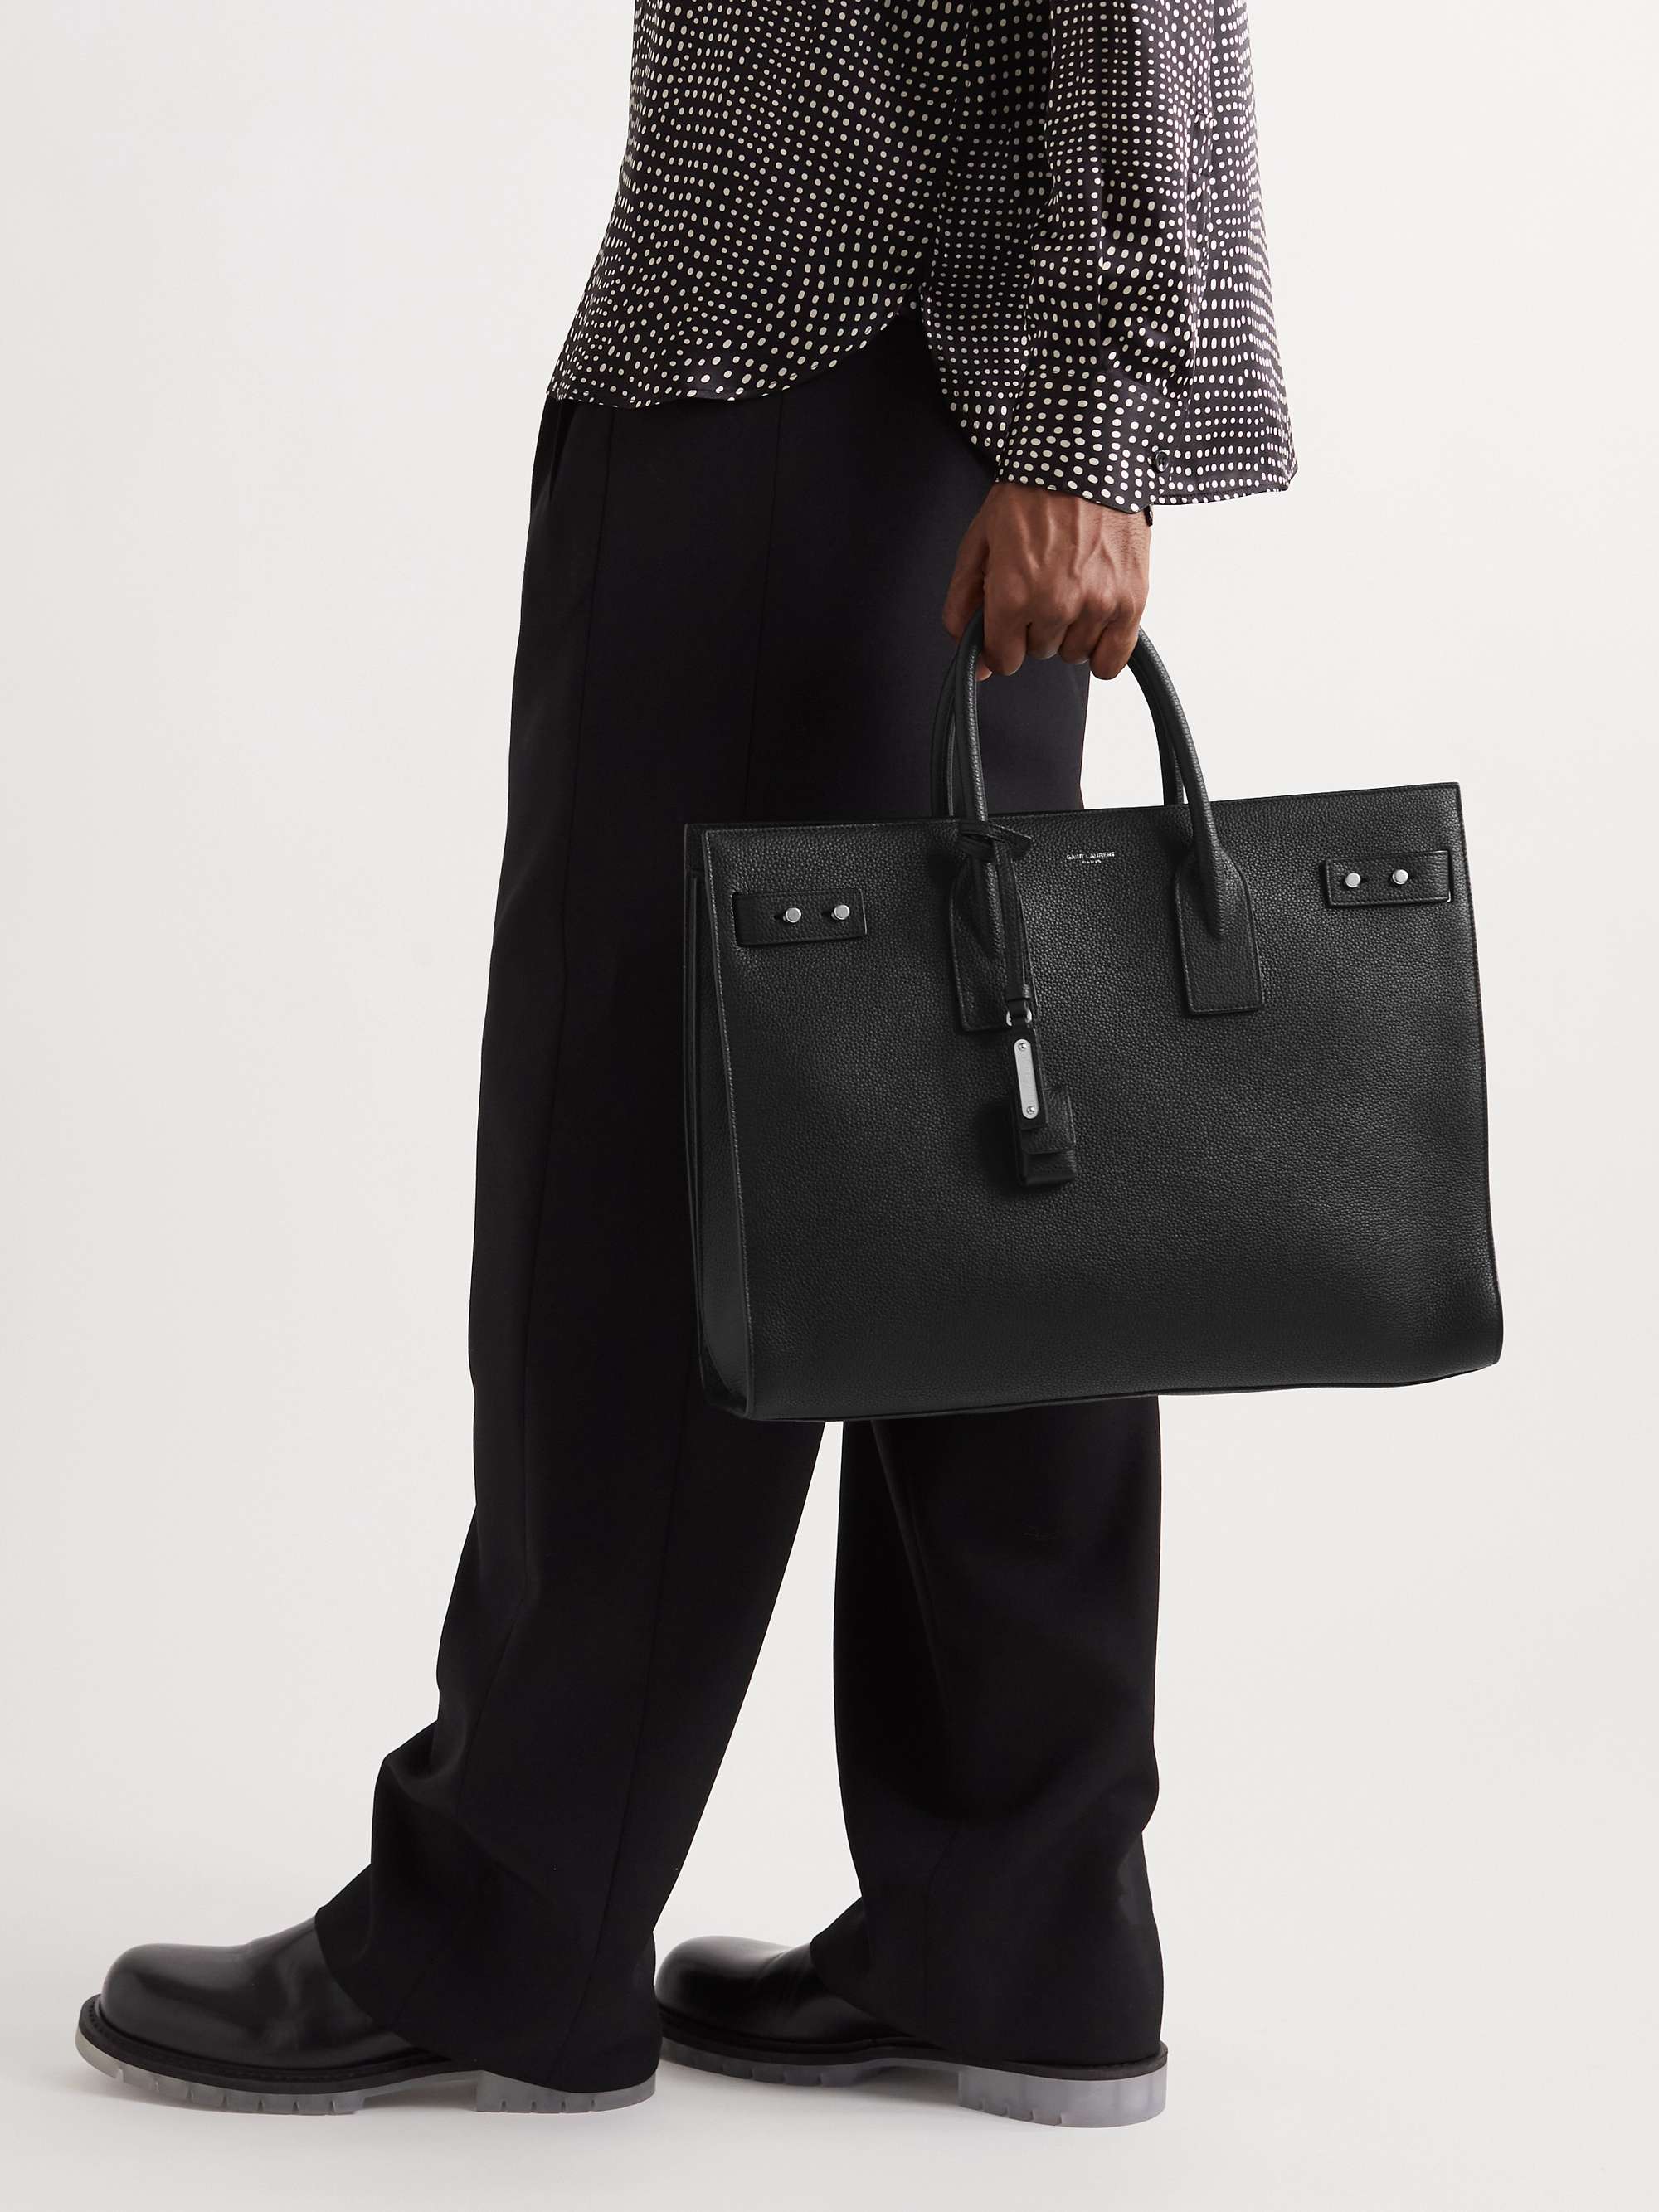 Black Sac de Jour Large Full-Grain Leather Tote Bag | SAINT LAURENT | MR  PORTER